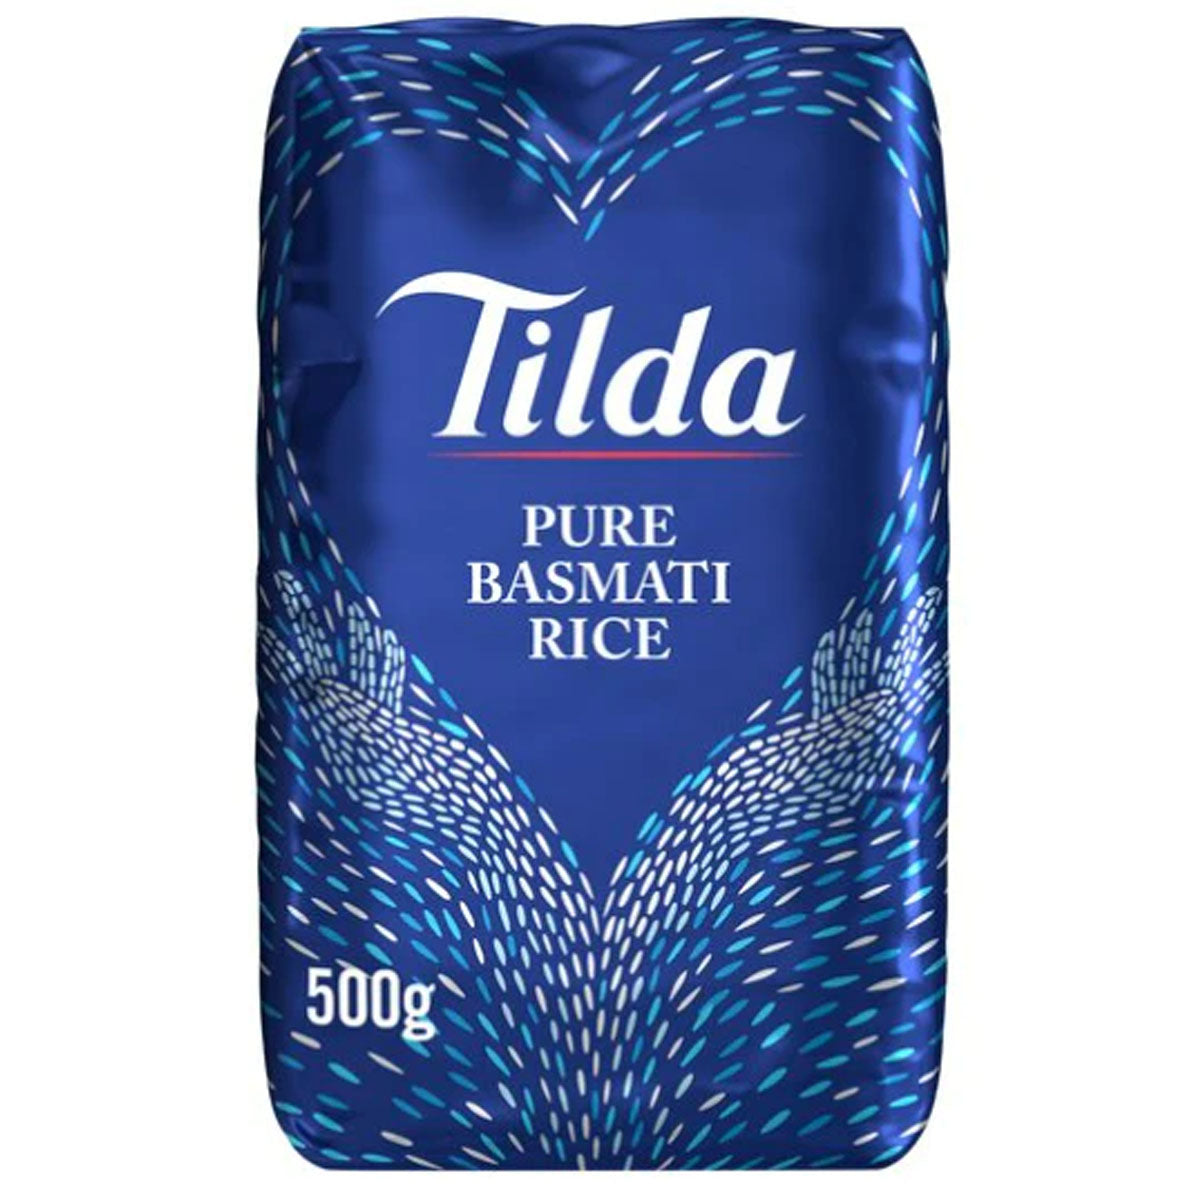 Tilda - Basmati Rice - 500g.